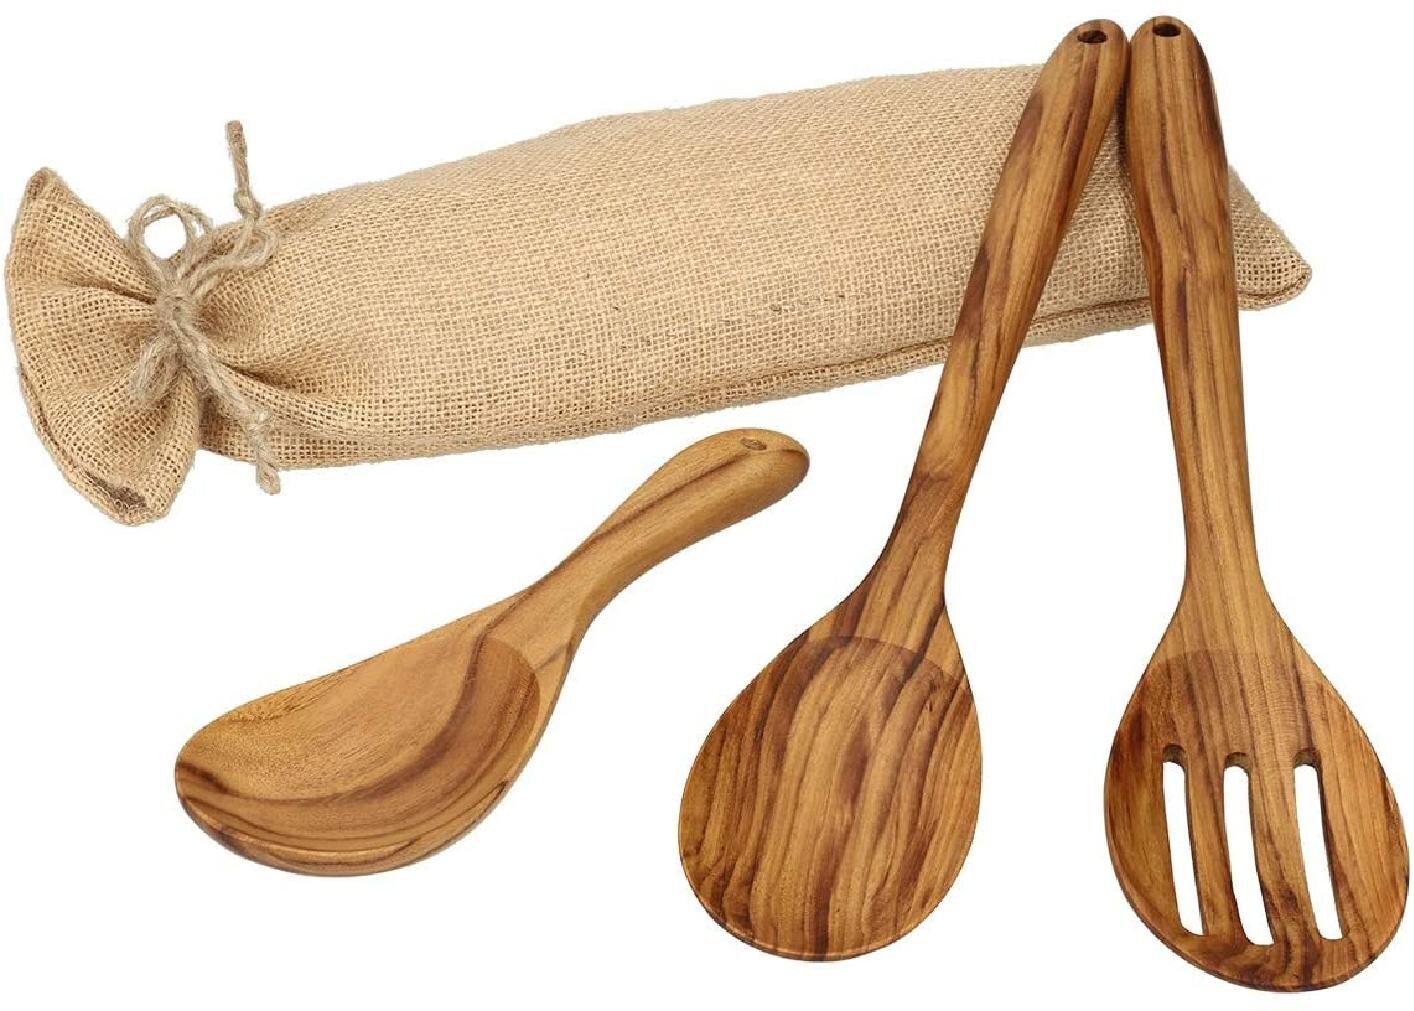 Wood Teak Utensils Kitchen Utensil Set Wooden Spoons Spatula Cooking Tool 